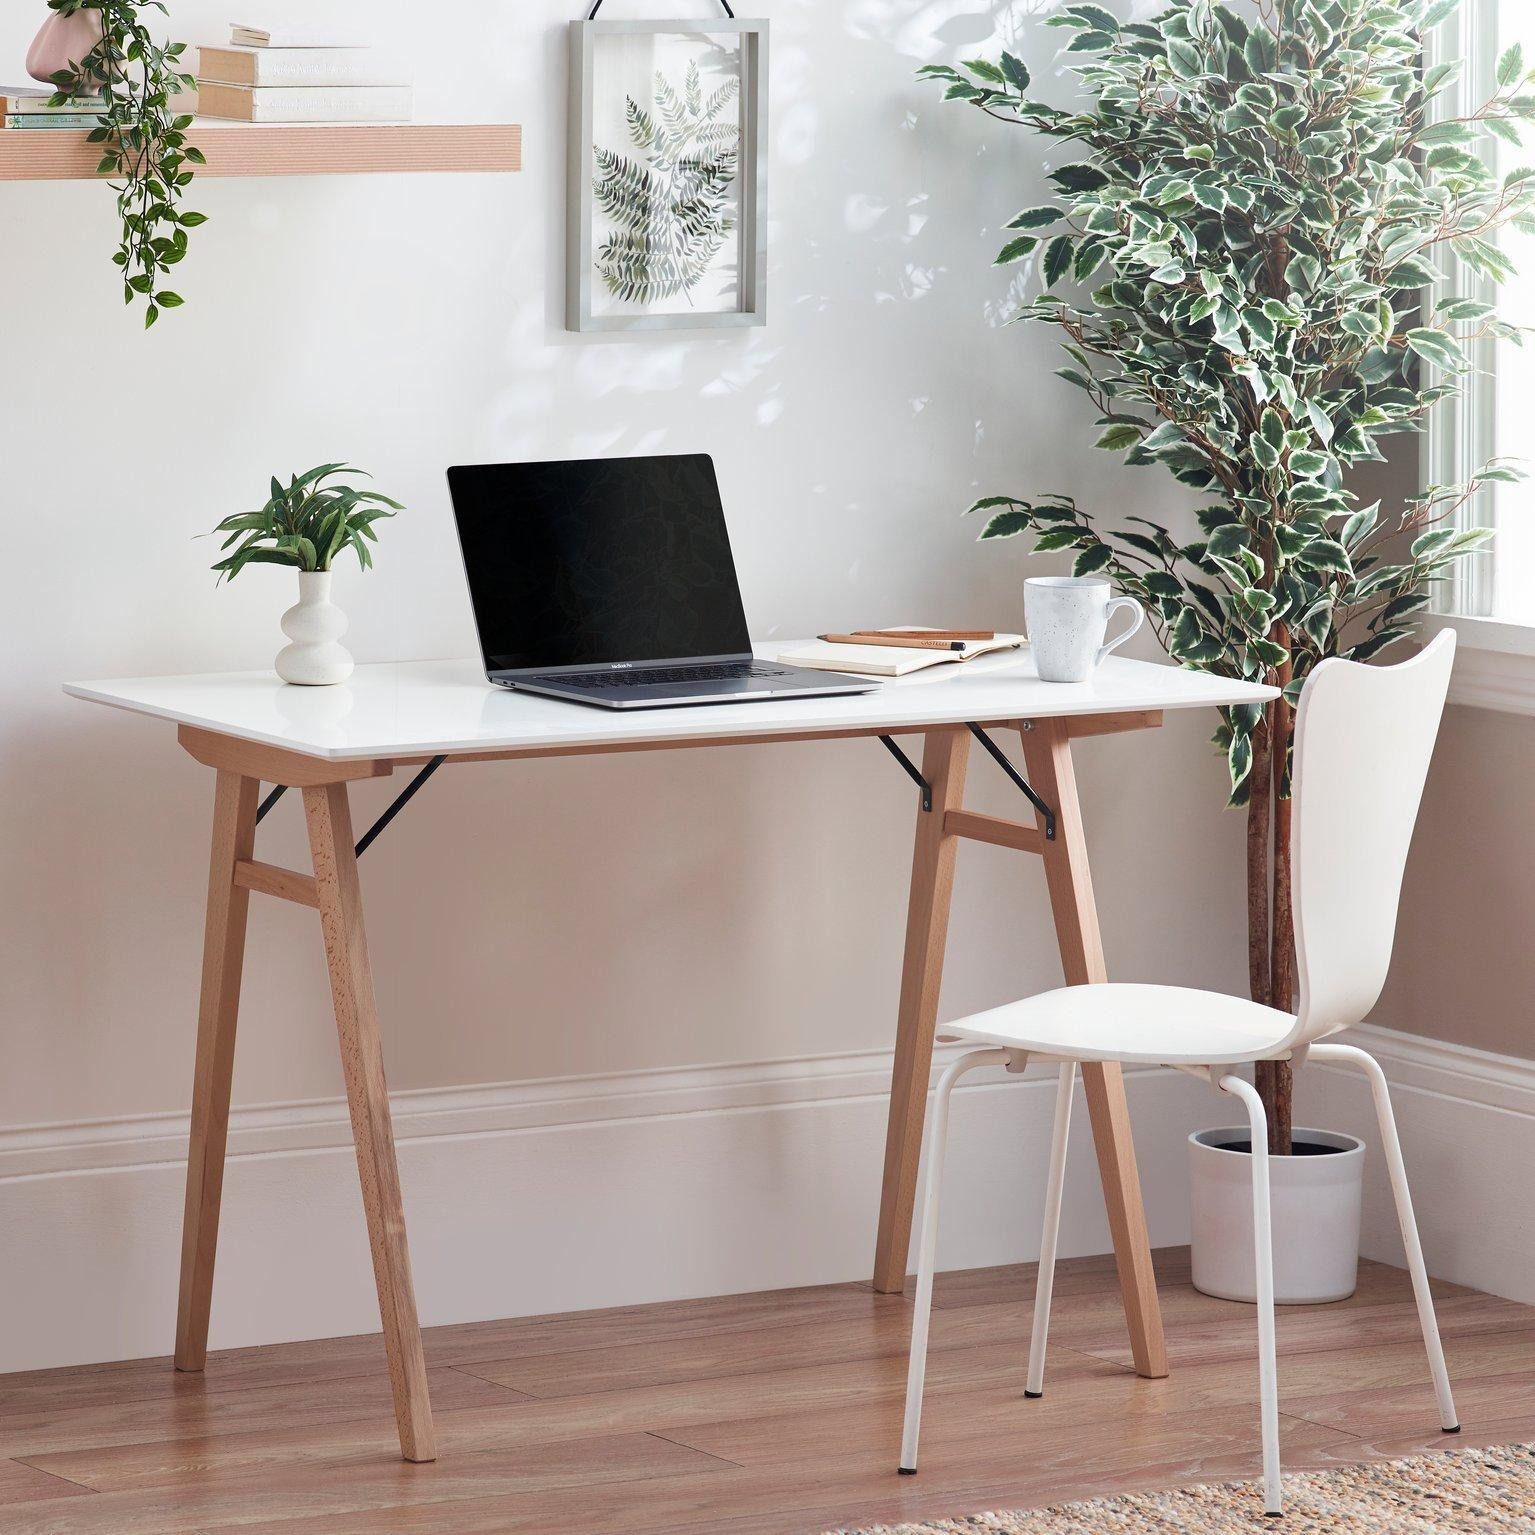 Ivan Desk 120x60cm - White Home Office Desk - Work or Gaming - A-Frame Trestle Table Style Black Or beech Wood Legs -  Semi-Matte White Veneer Top - Made In Ukraine - image 1